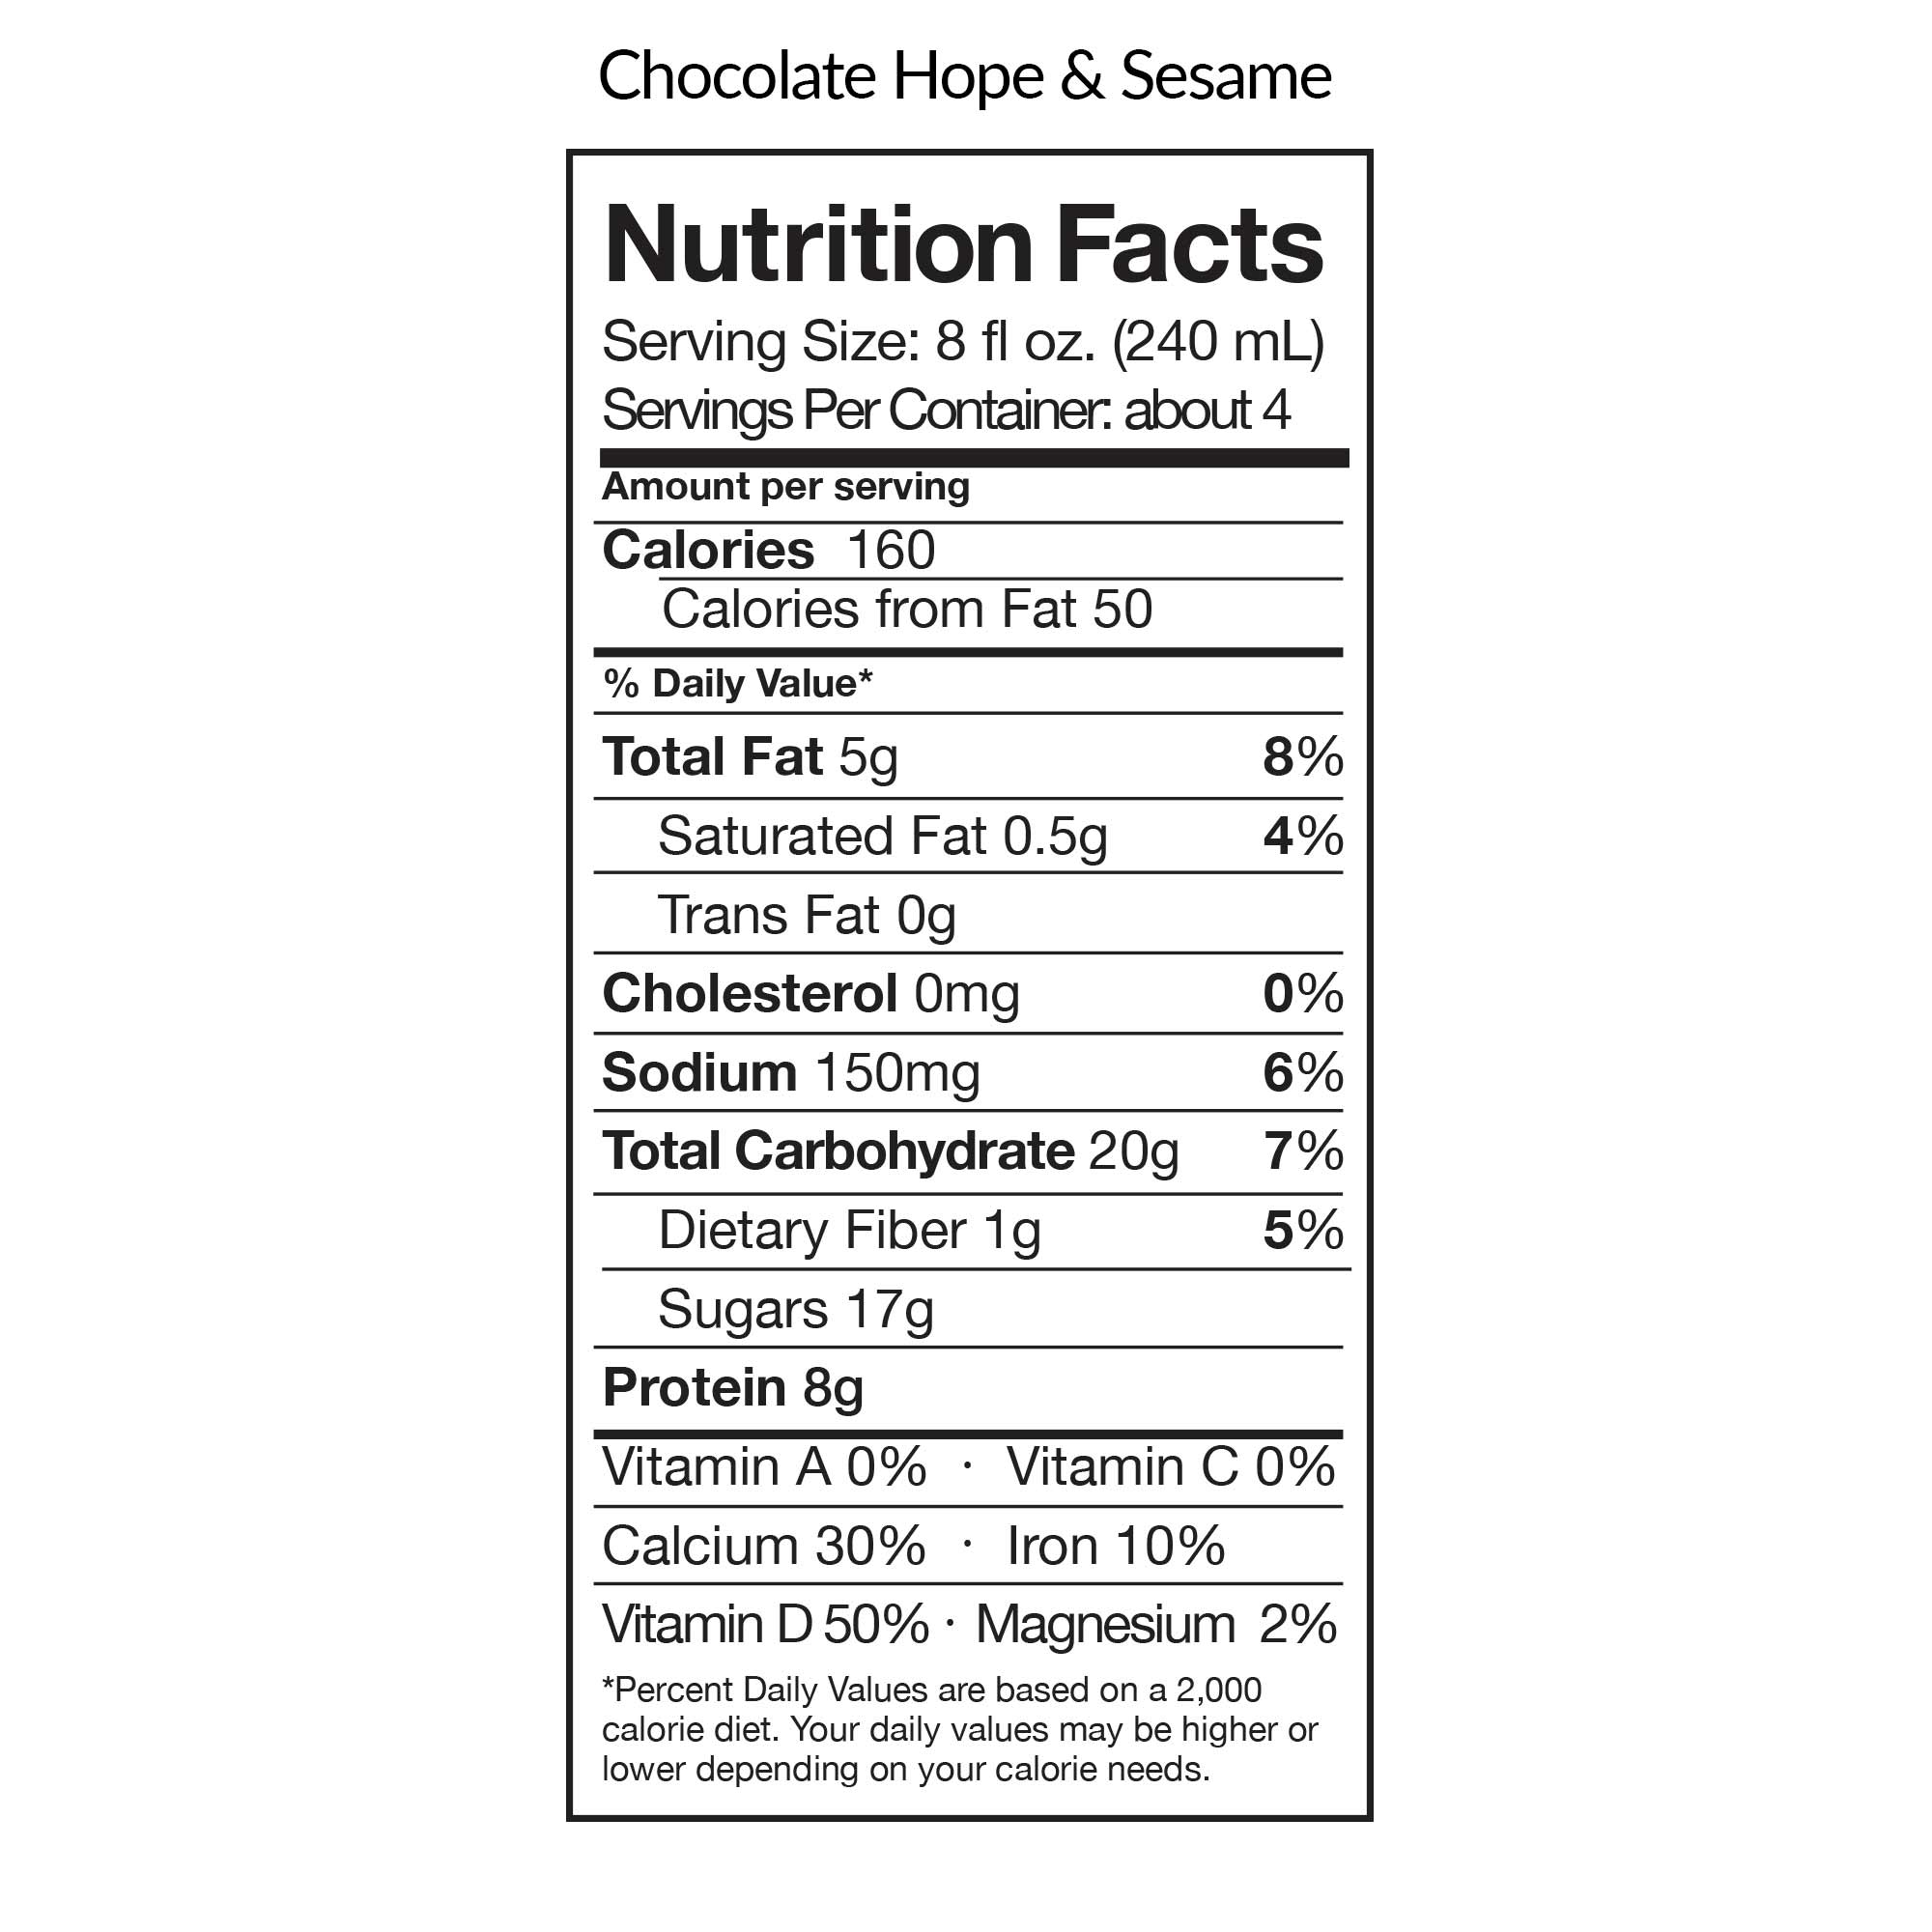 Chocolate Non-GMO Aseptic Sesamemilk (6 Pack)